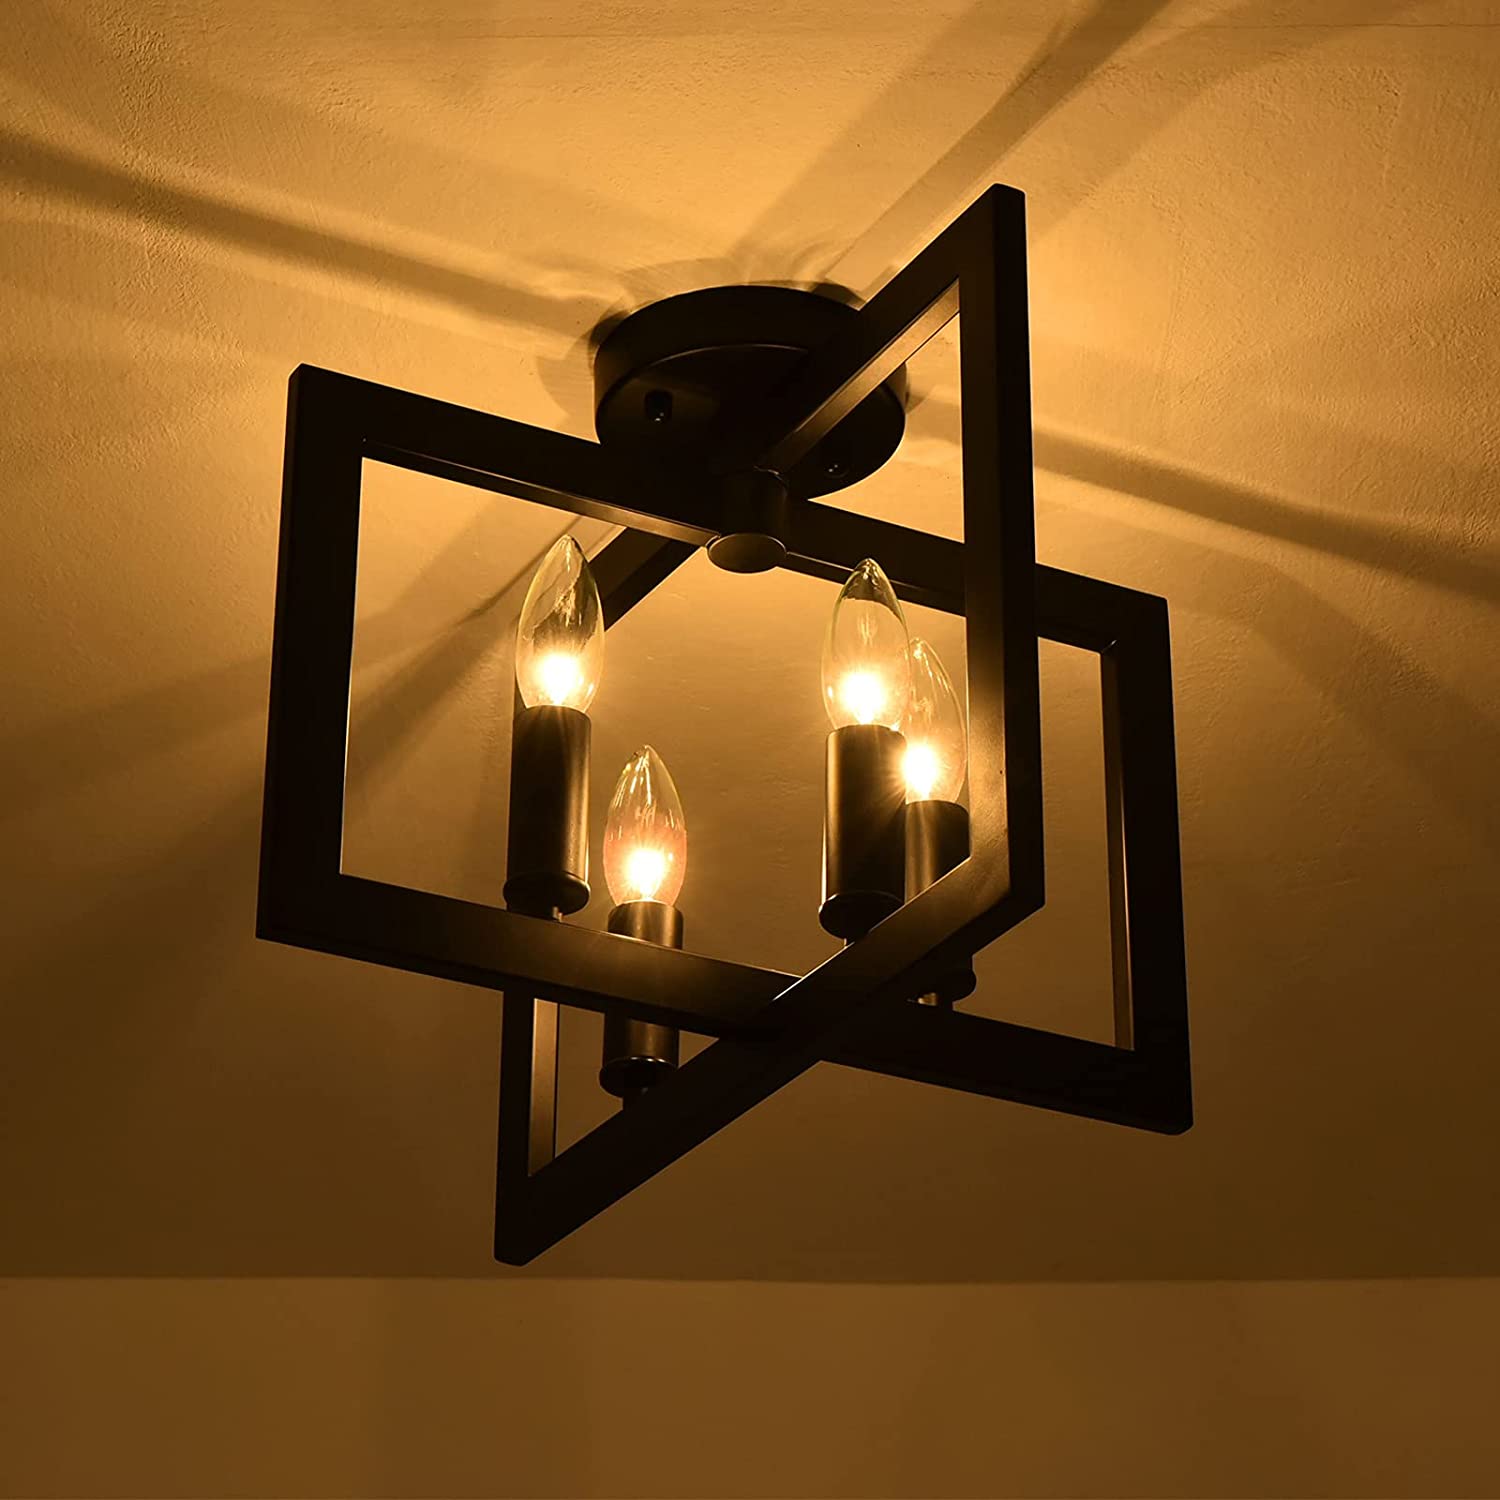 4 light farmhouse ceiling light fixture industrial black semi flush mount lighting